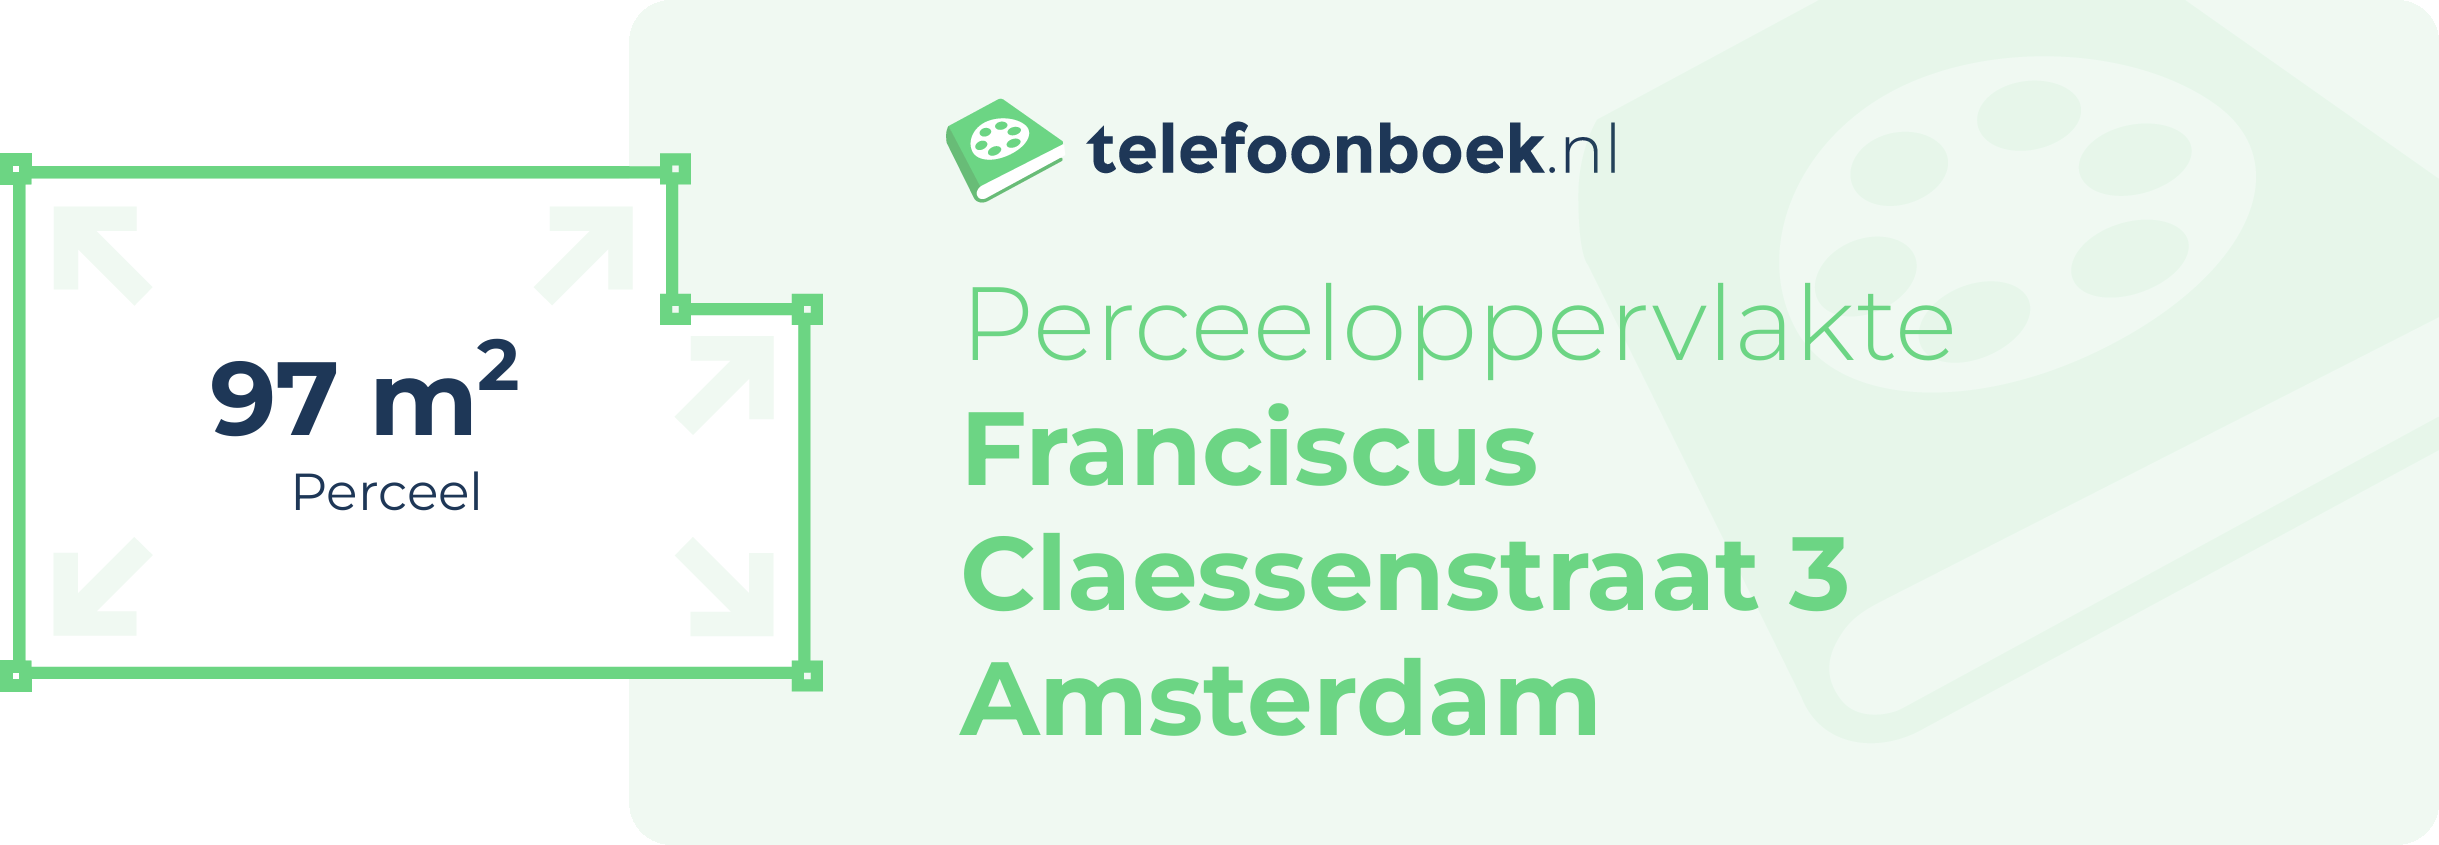 Perceeloppervlakte Franciscus Claessenstraat 3 Amsterdam